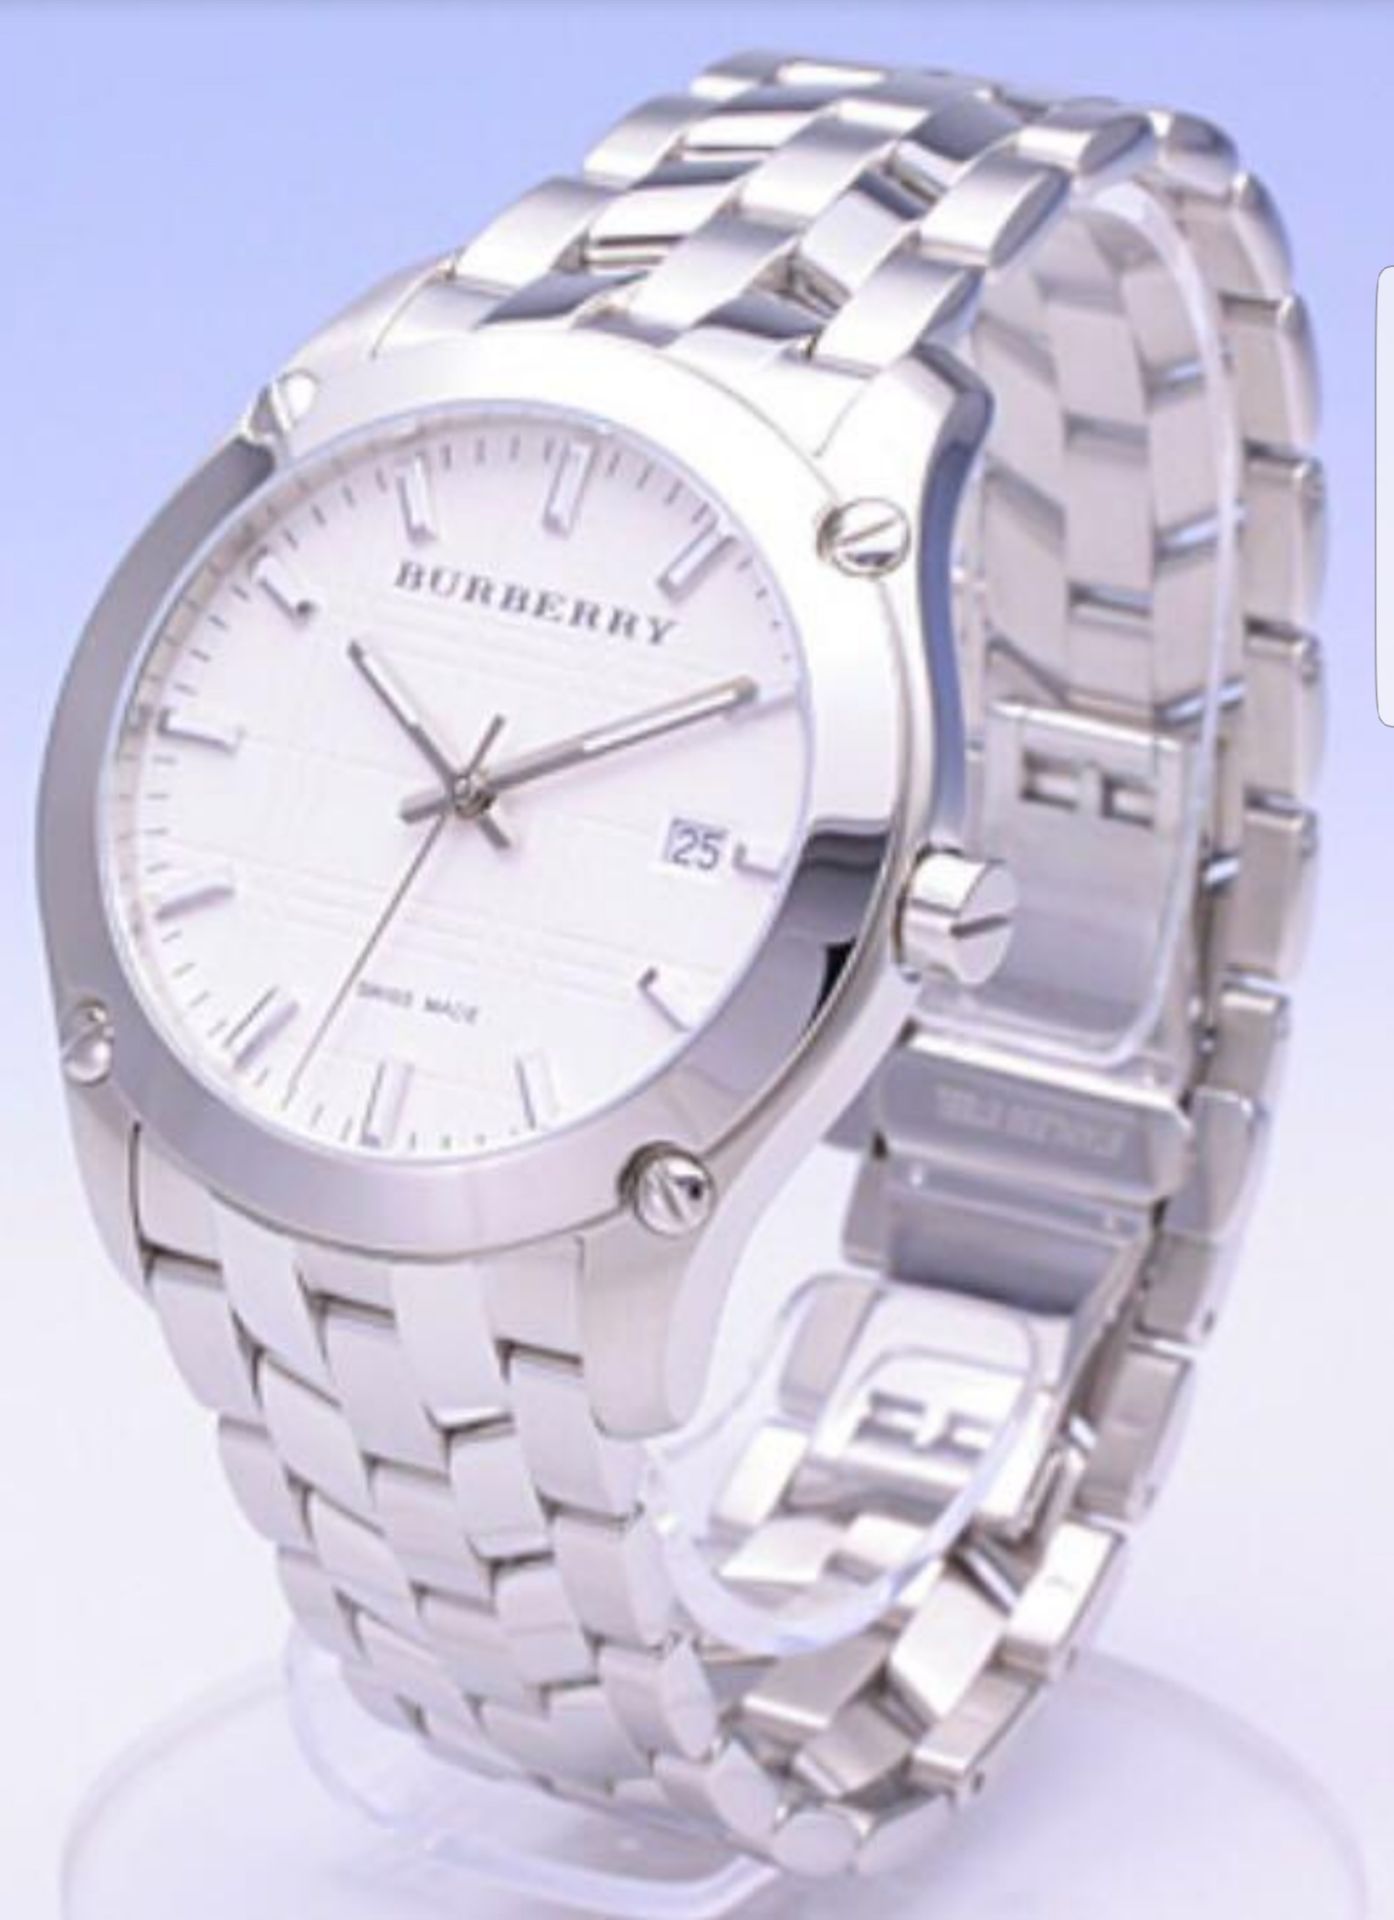 Burberry BU1852 Men's White Dial Stainless Steel Bracelet Wrist Watch - Image 4 of 6